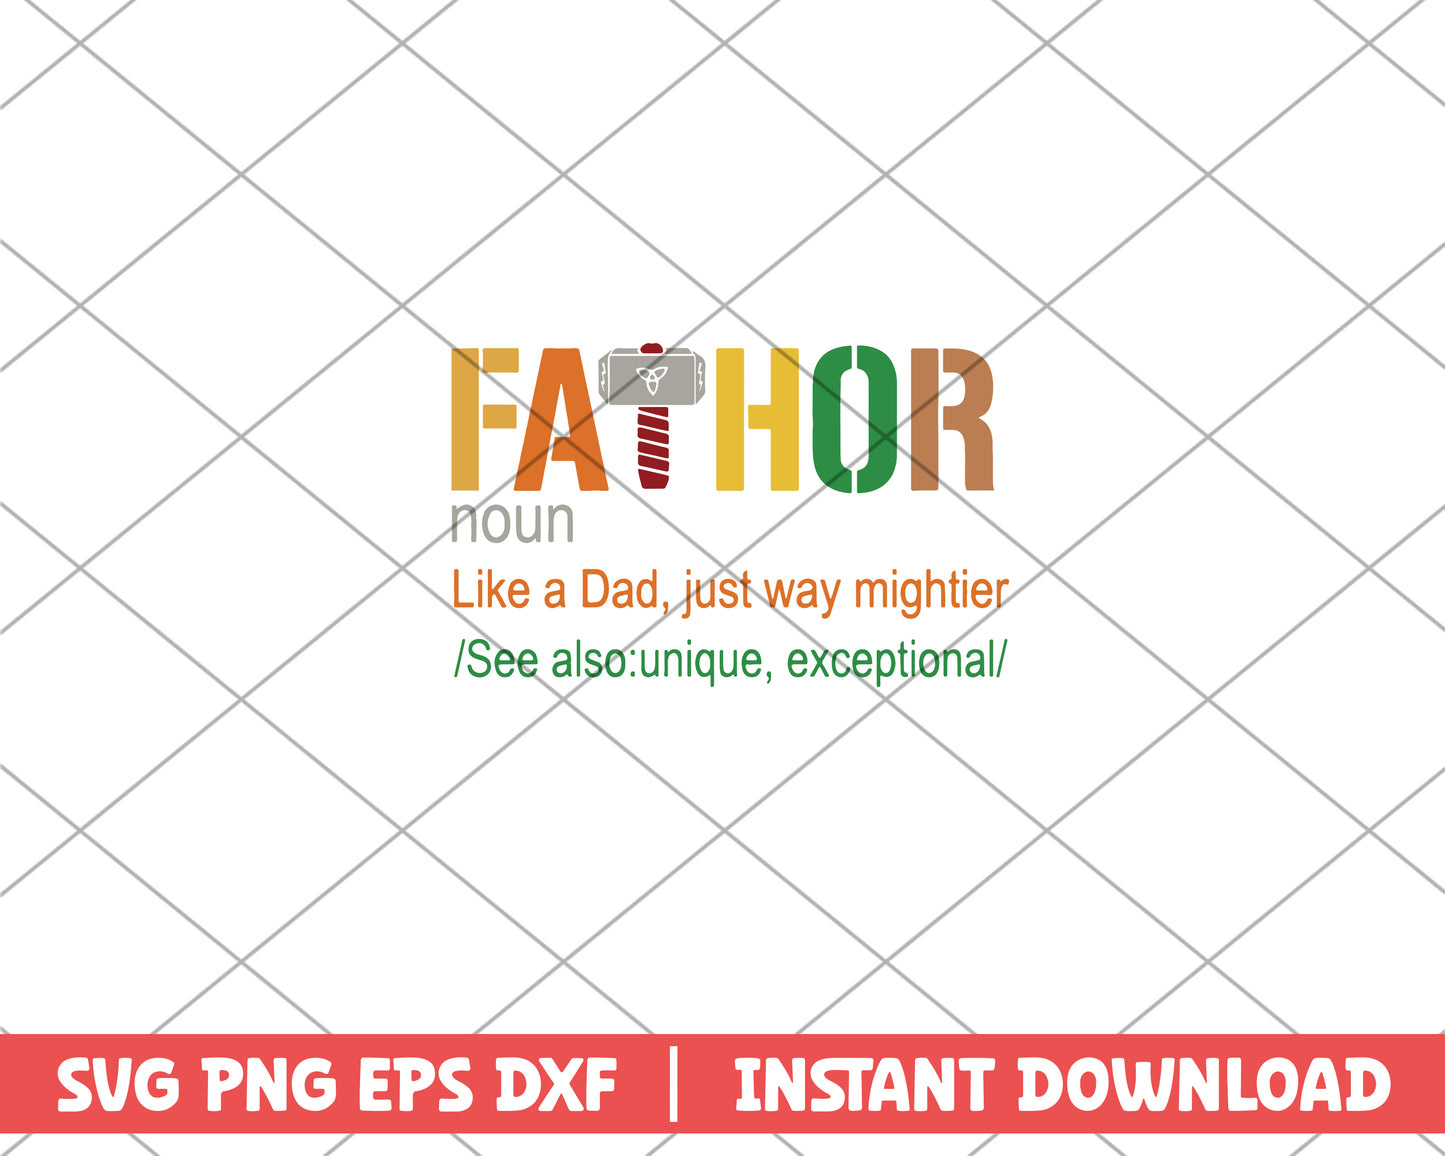 FaThor Noun Definition like A Dad Just Way Mightier svg